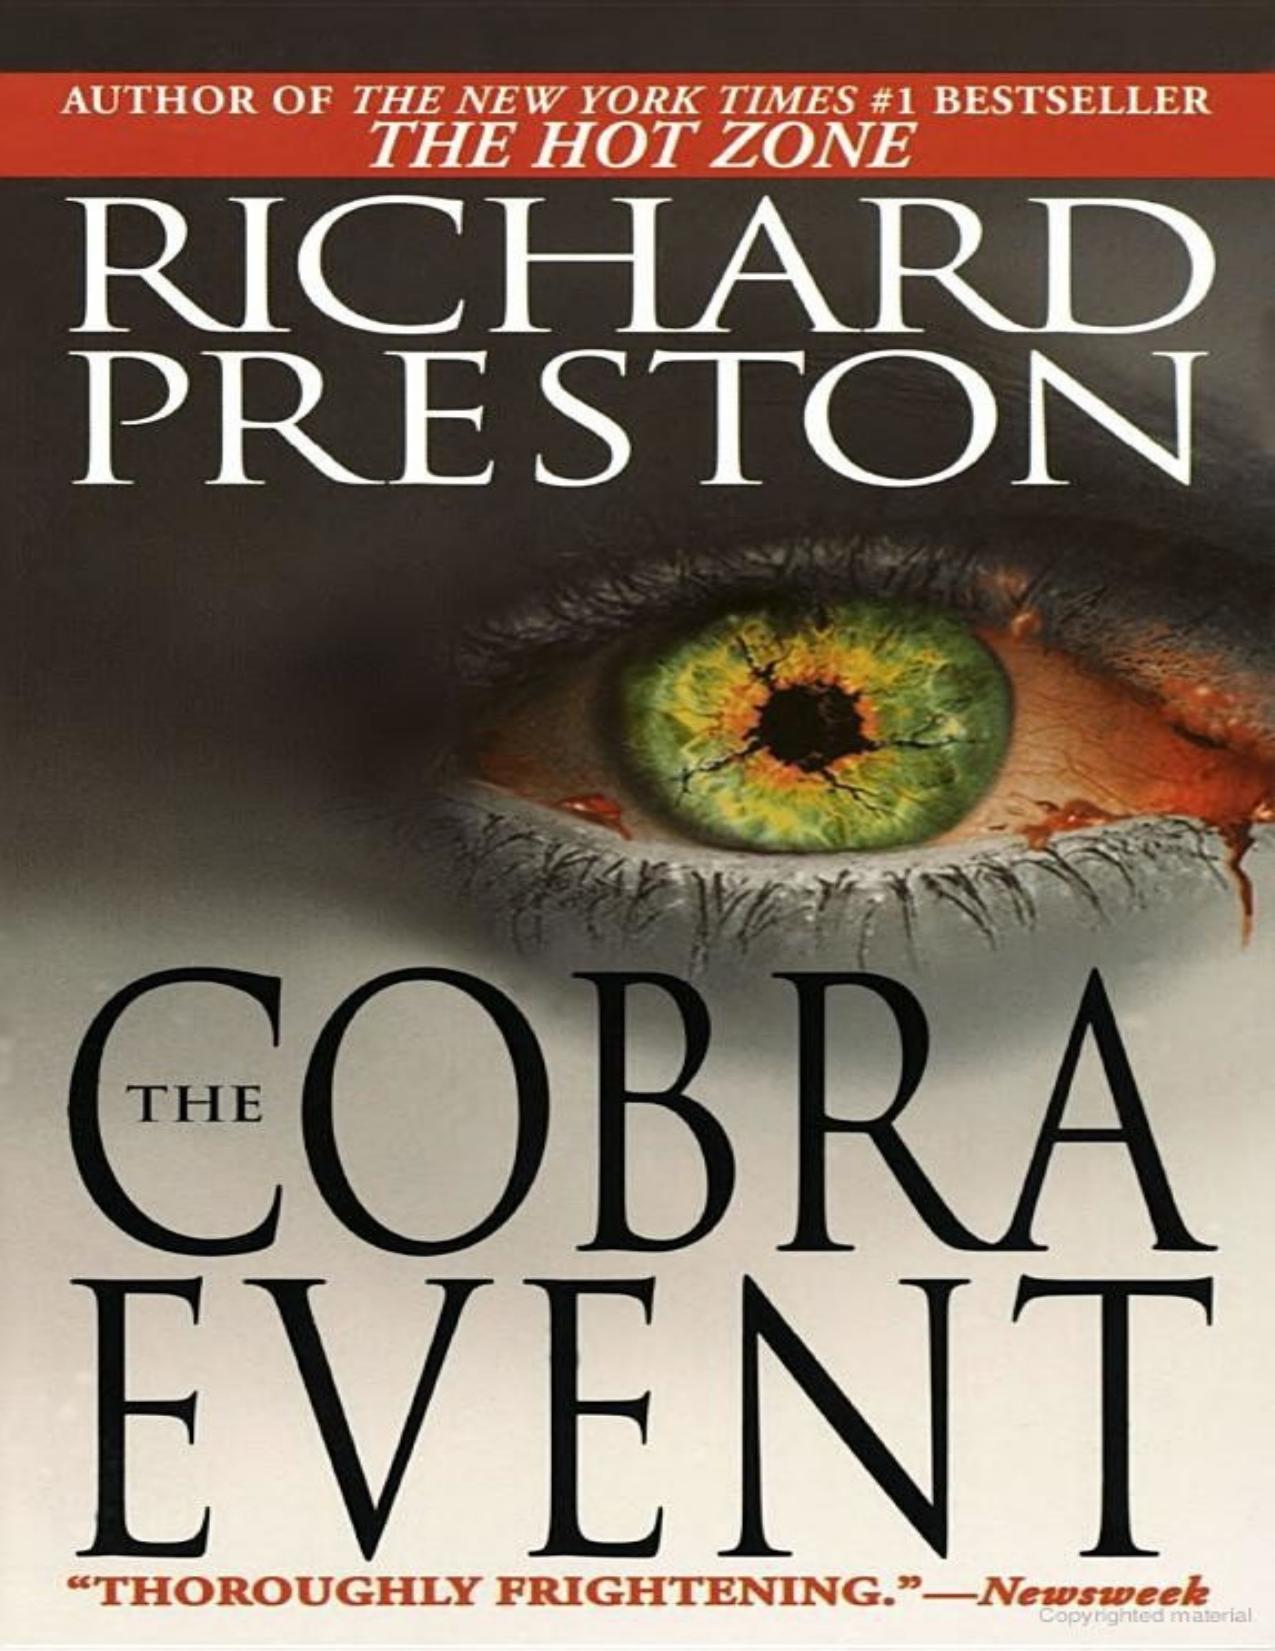 The Cobra Event by Richard Preston